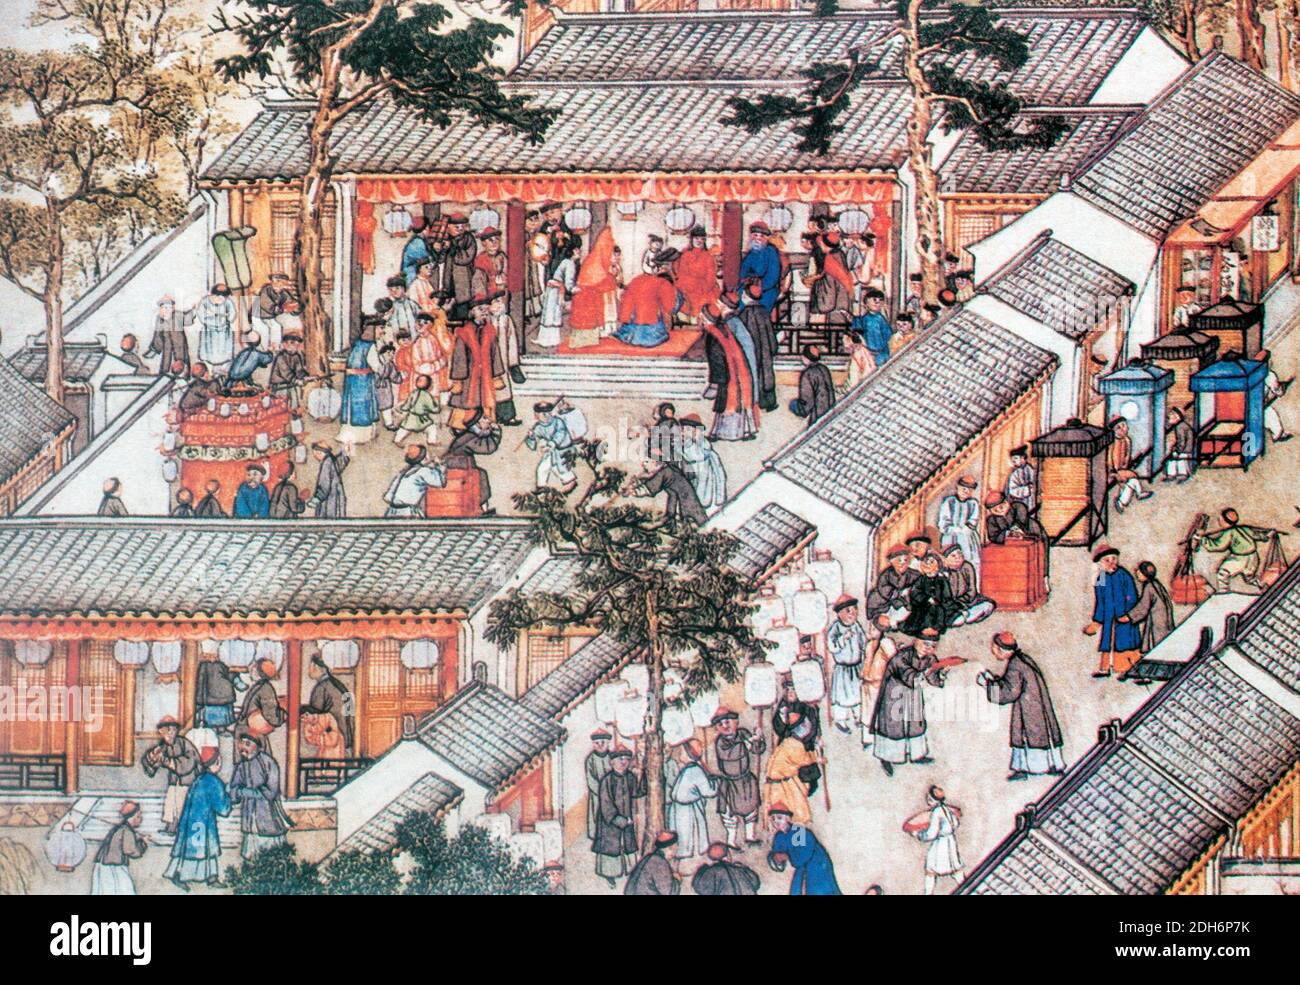 Ehe im wohlhabenden Suzhou - Xu Yang Stockfoto